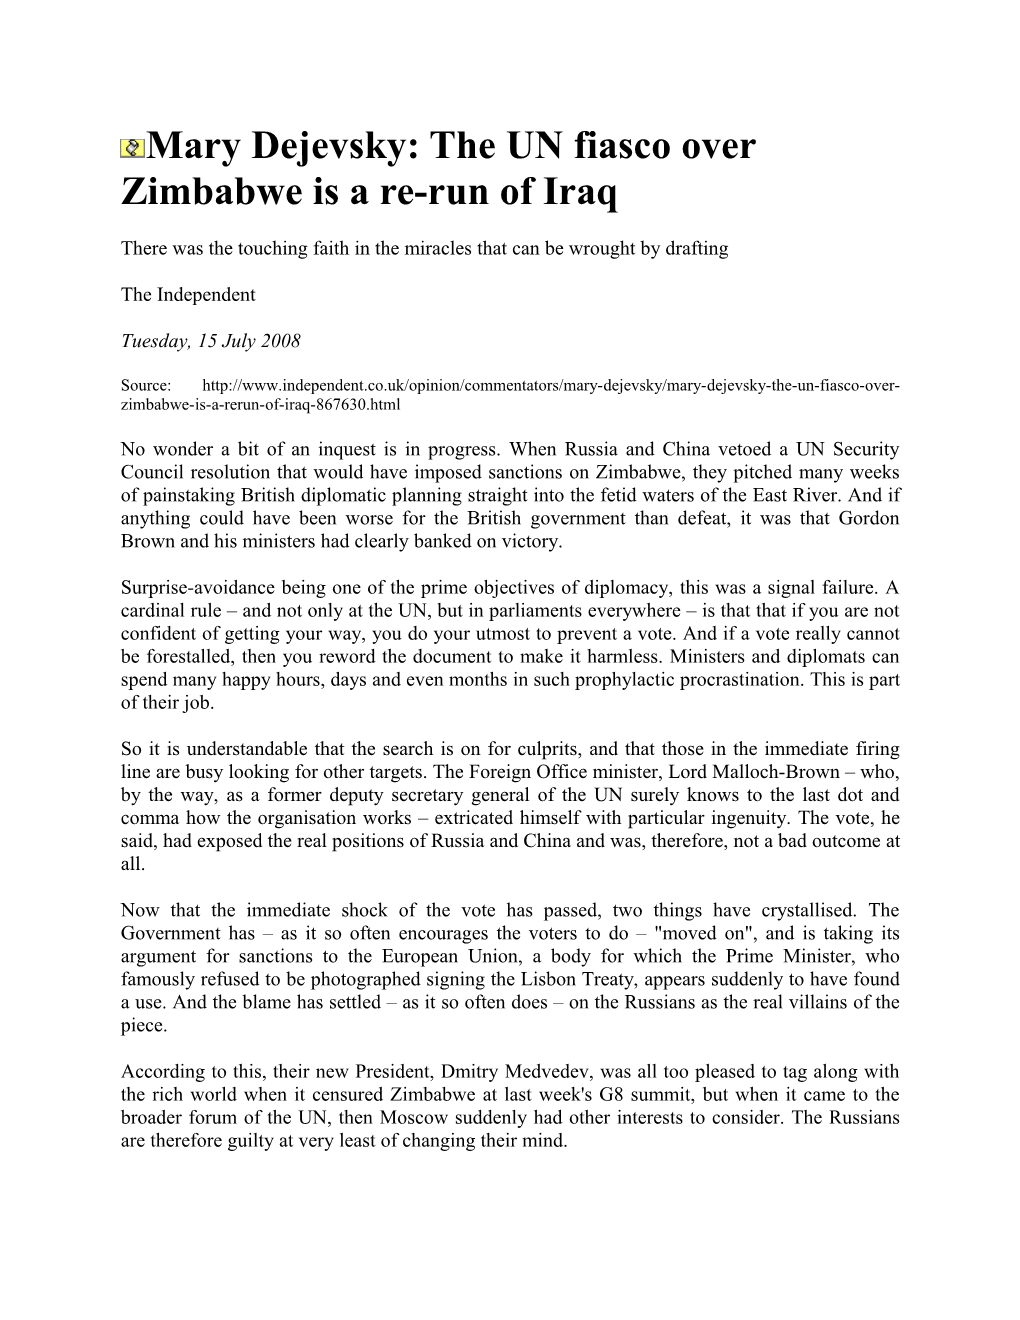 Mary Dejevsky: the UN Fiasco Over Zimbabwe Is a Re-Run of Iraq